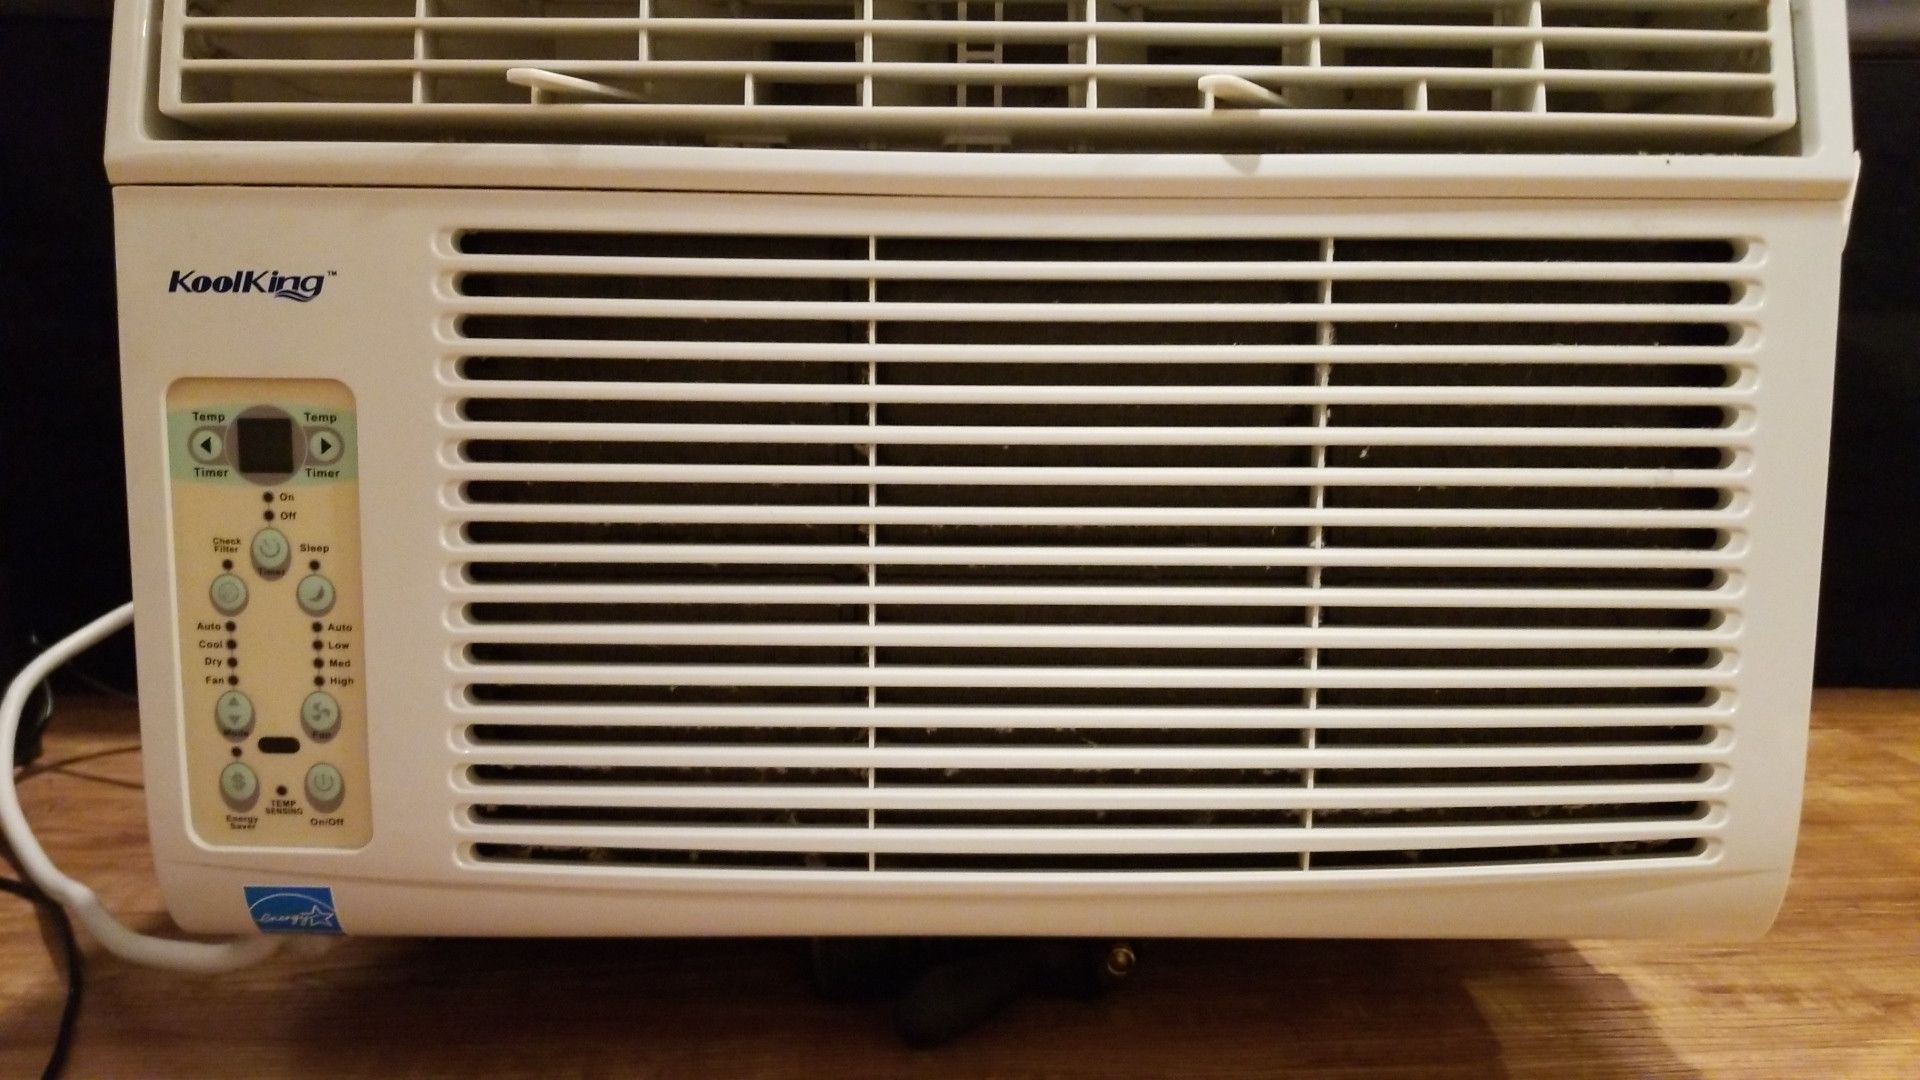 Kool King air conditioner